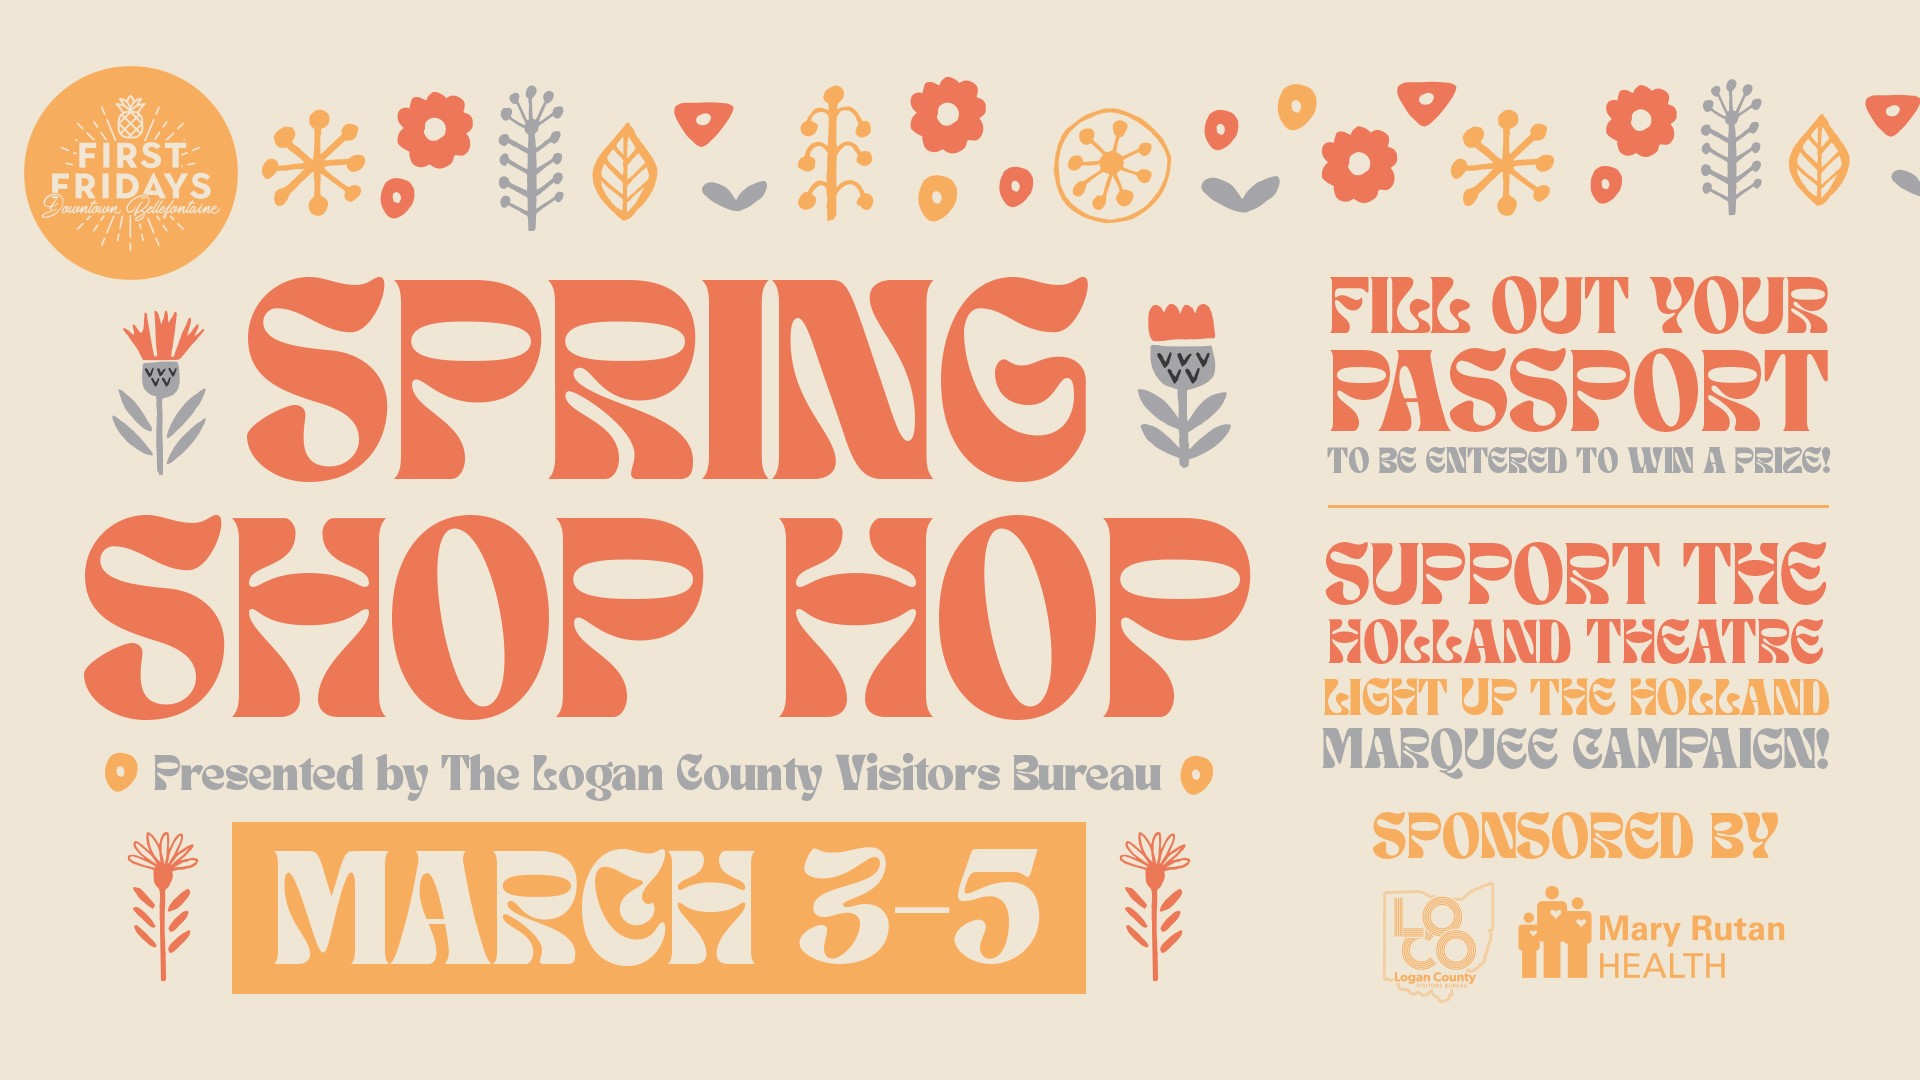 Spring Shop Hop Presented by The Logan County Visitors Bureau￼